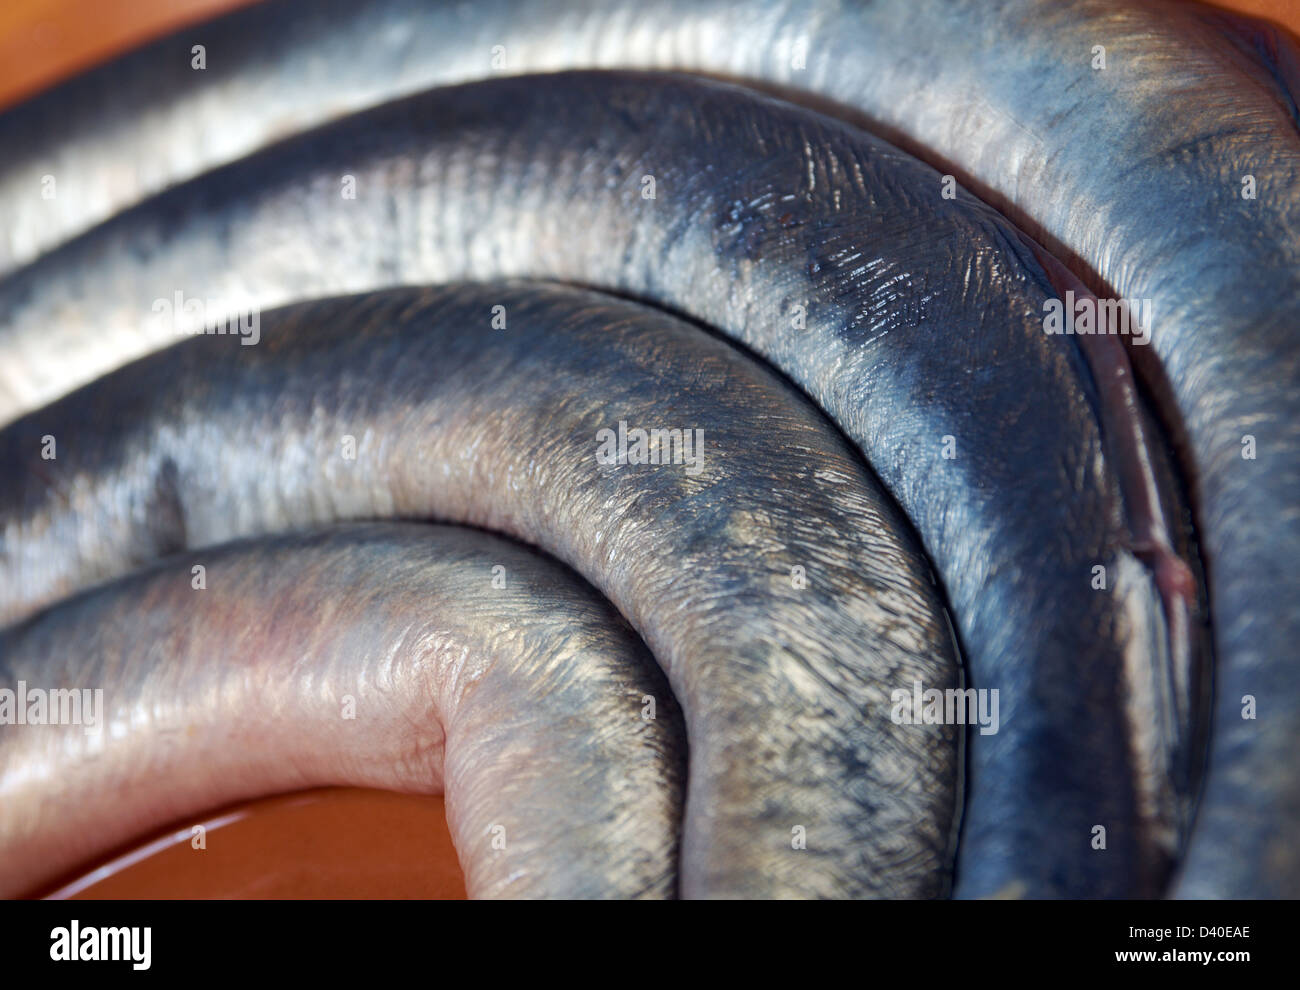 Fresh fish lamprey on plate. closeup Stock Photo